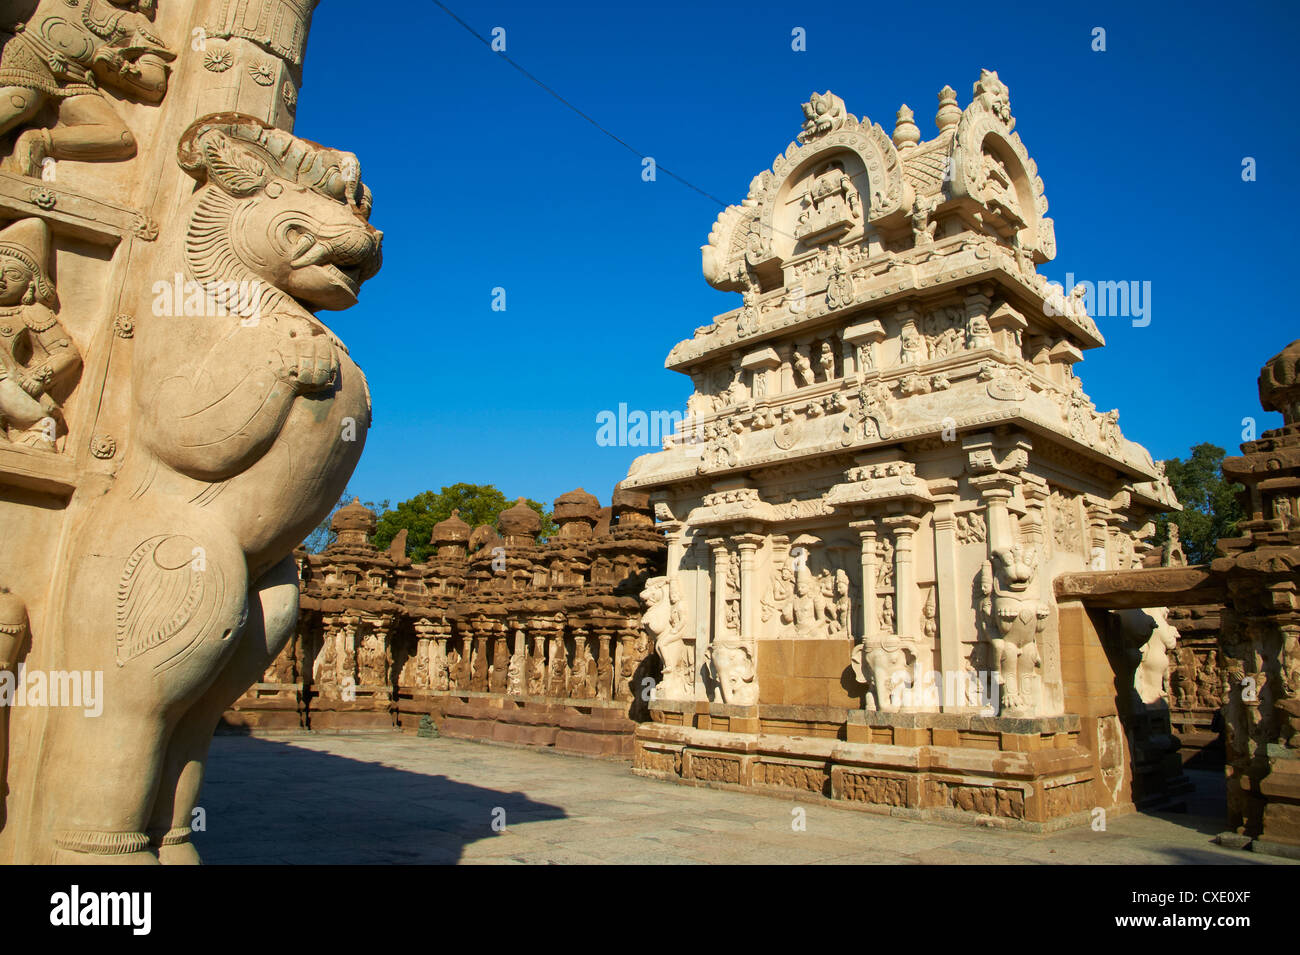 Kailasanatha temple dating from the 8th century, Kanchipuram, Tamil Nadu, India, Asia Stock Photo